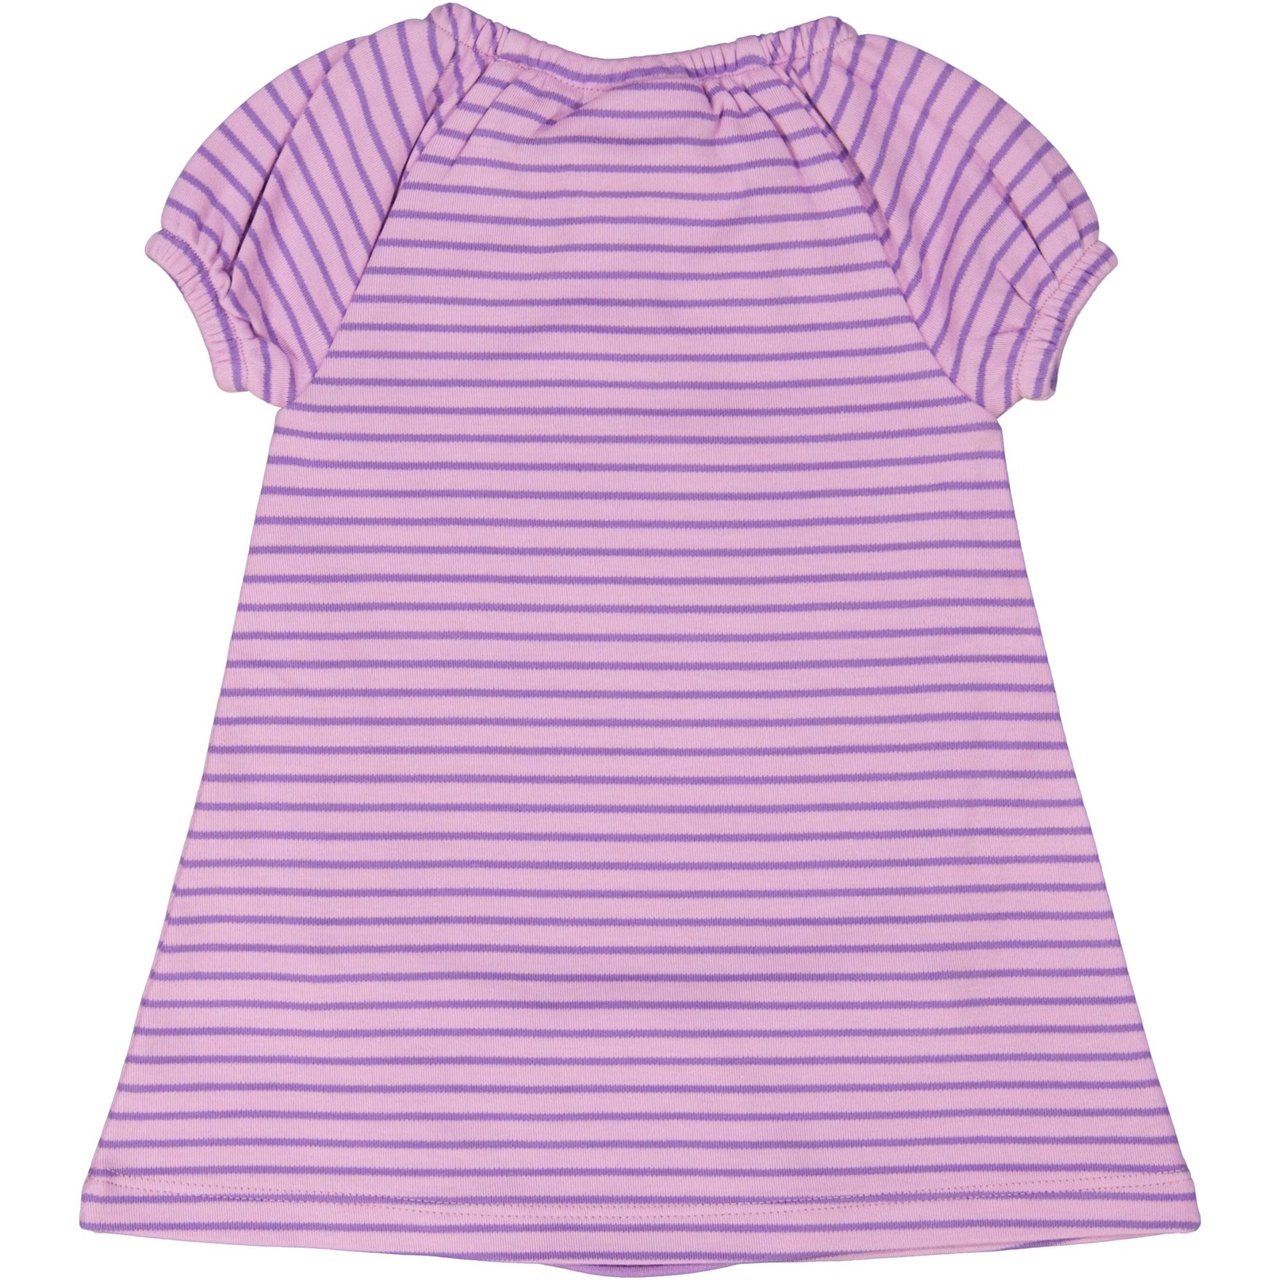 Singoalla dress L.purple/purple  50/56